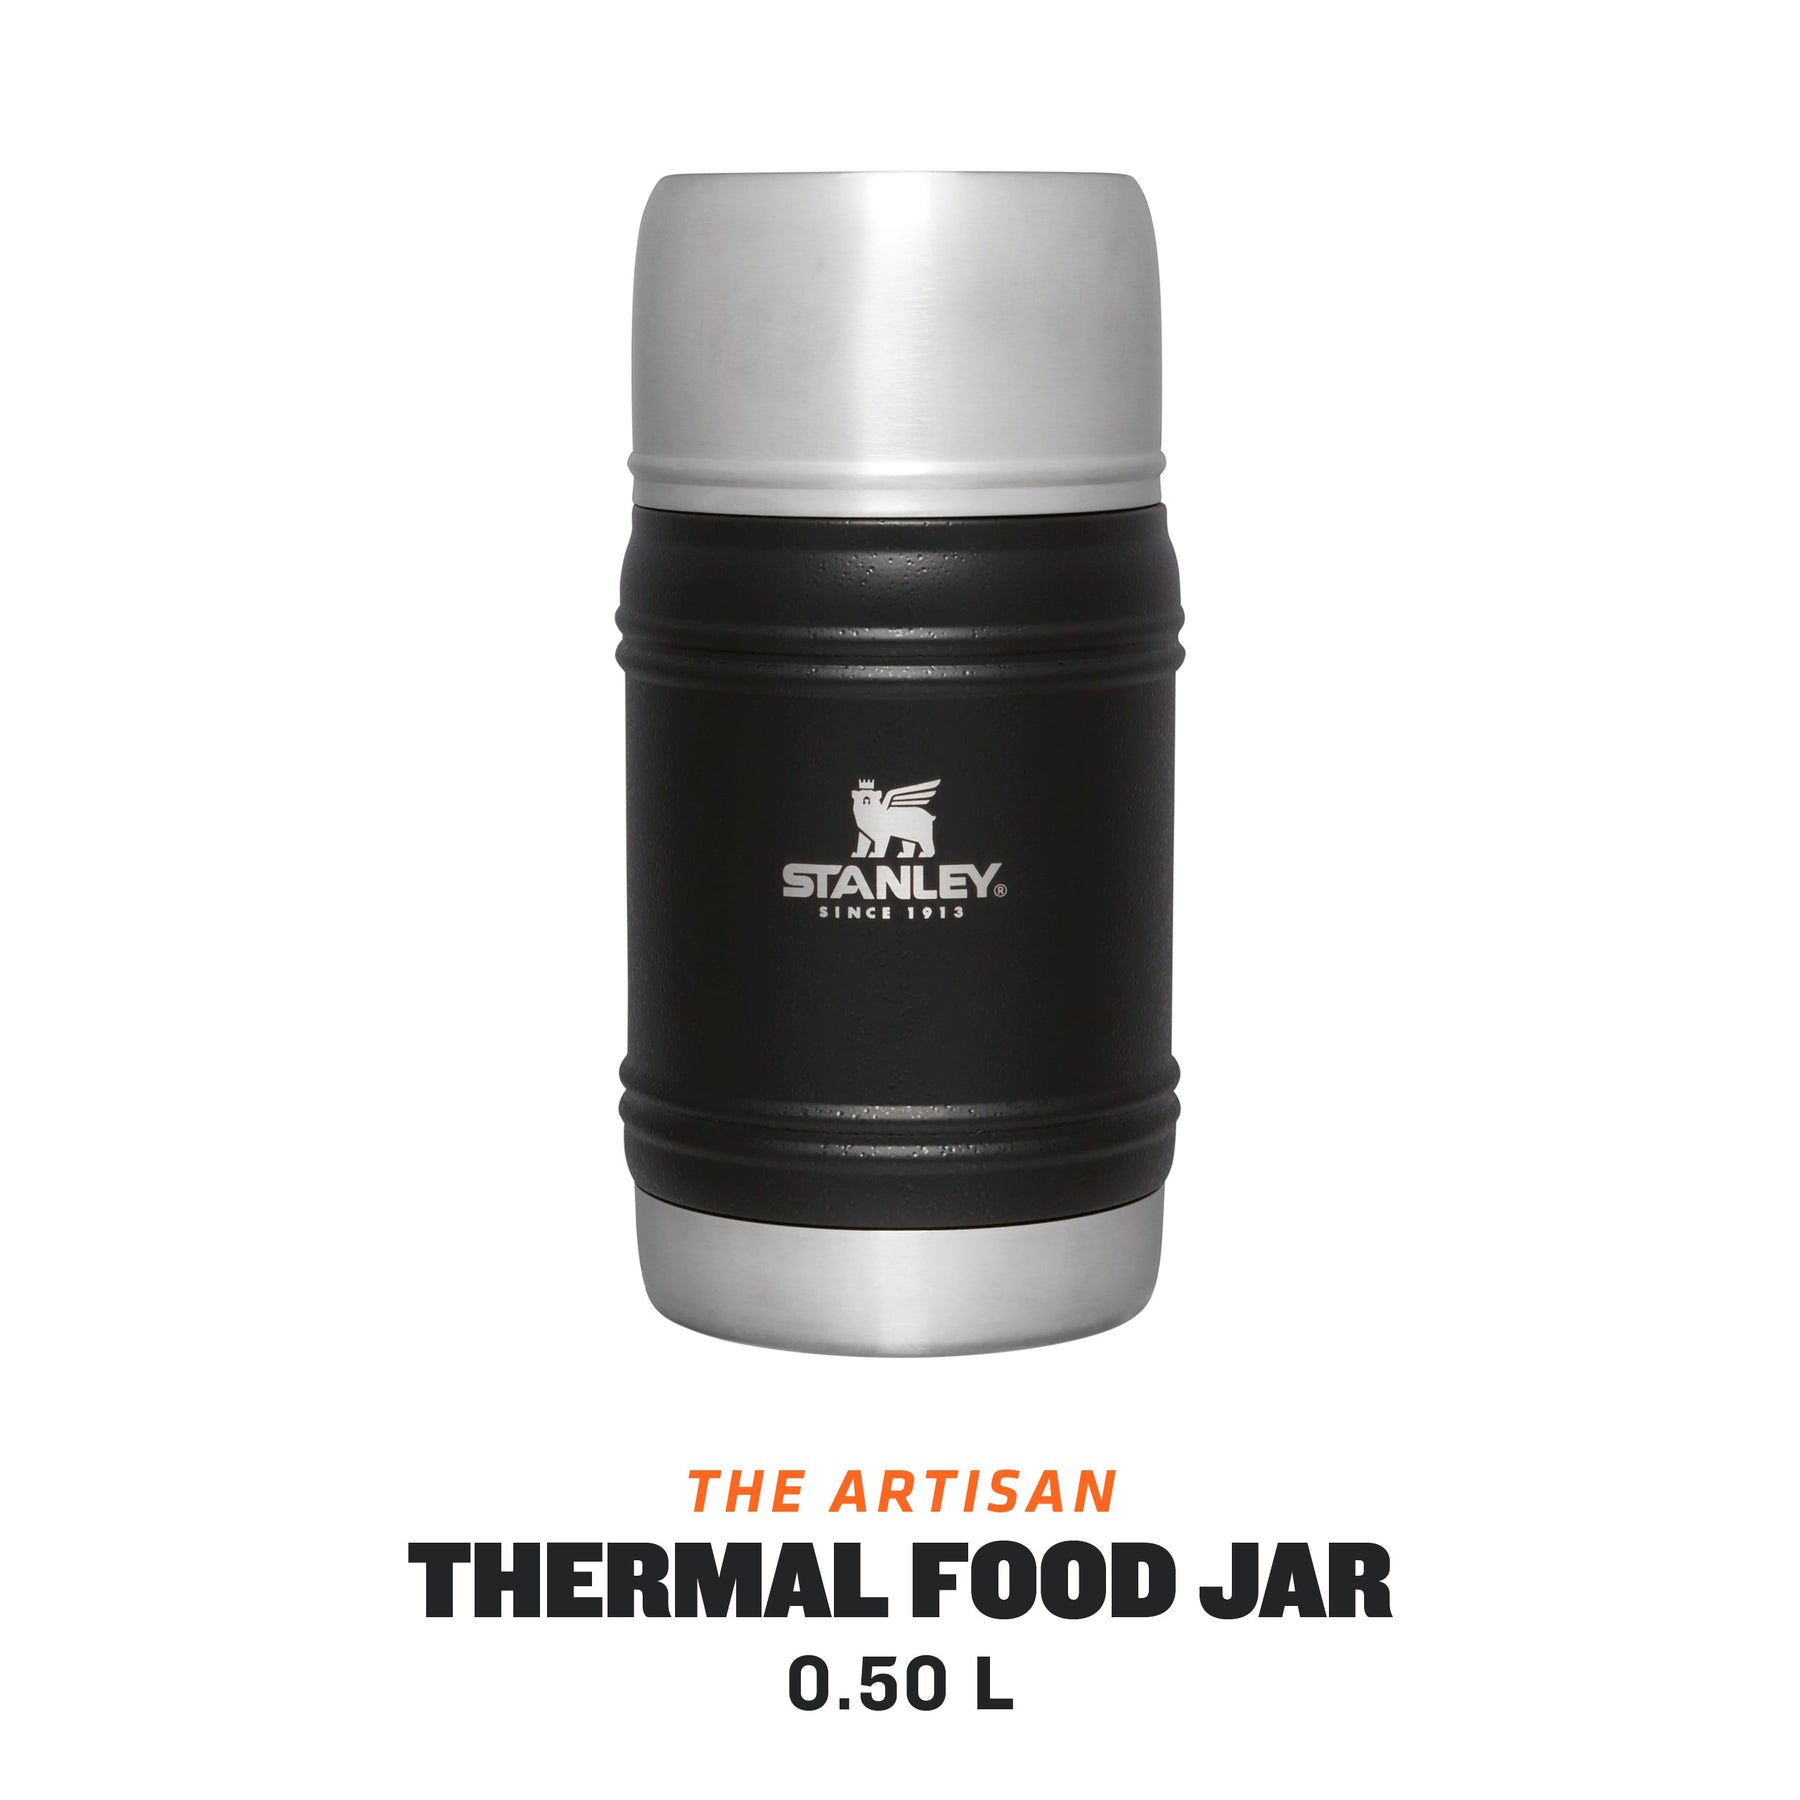 THE ARTISAN THERMAL FOOD JAR- 0.5L- STANLEY